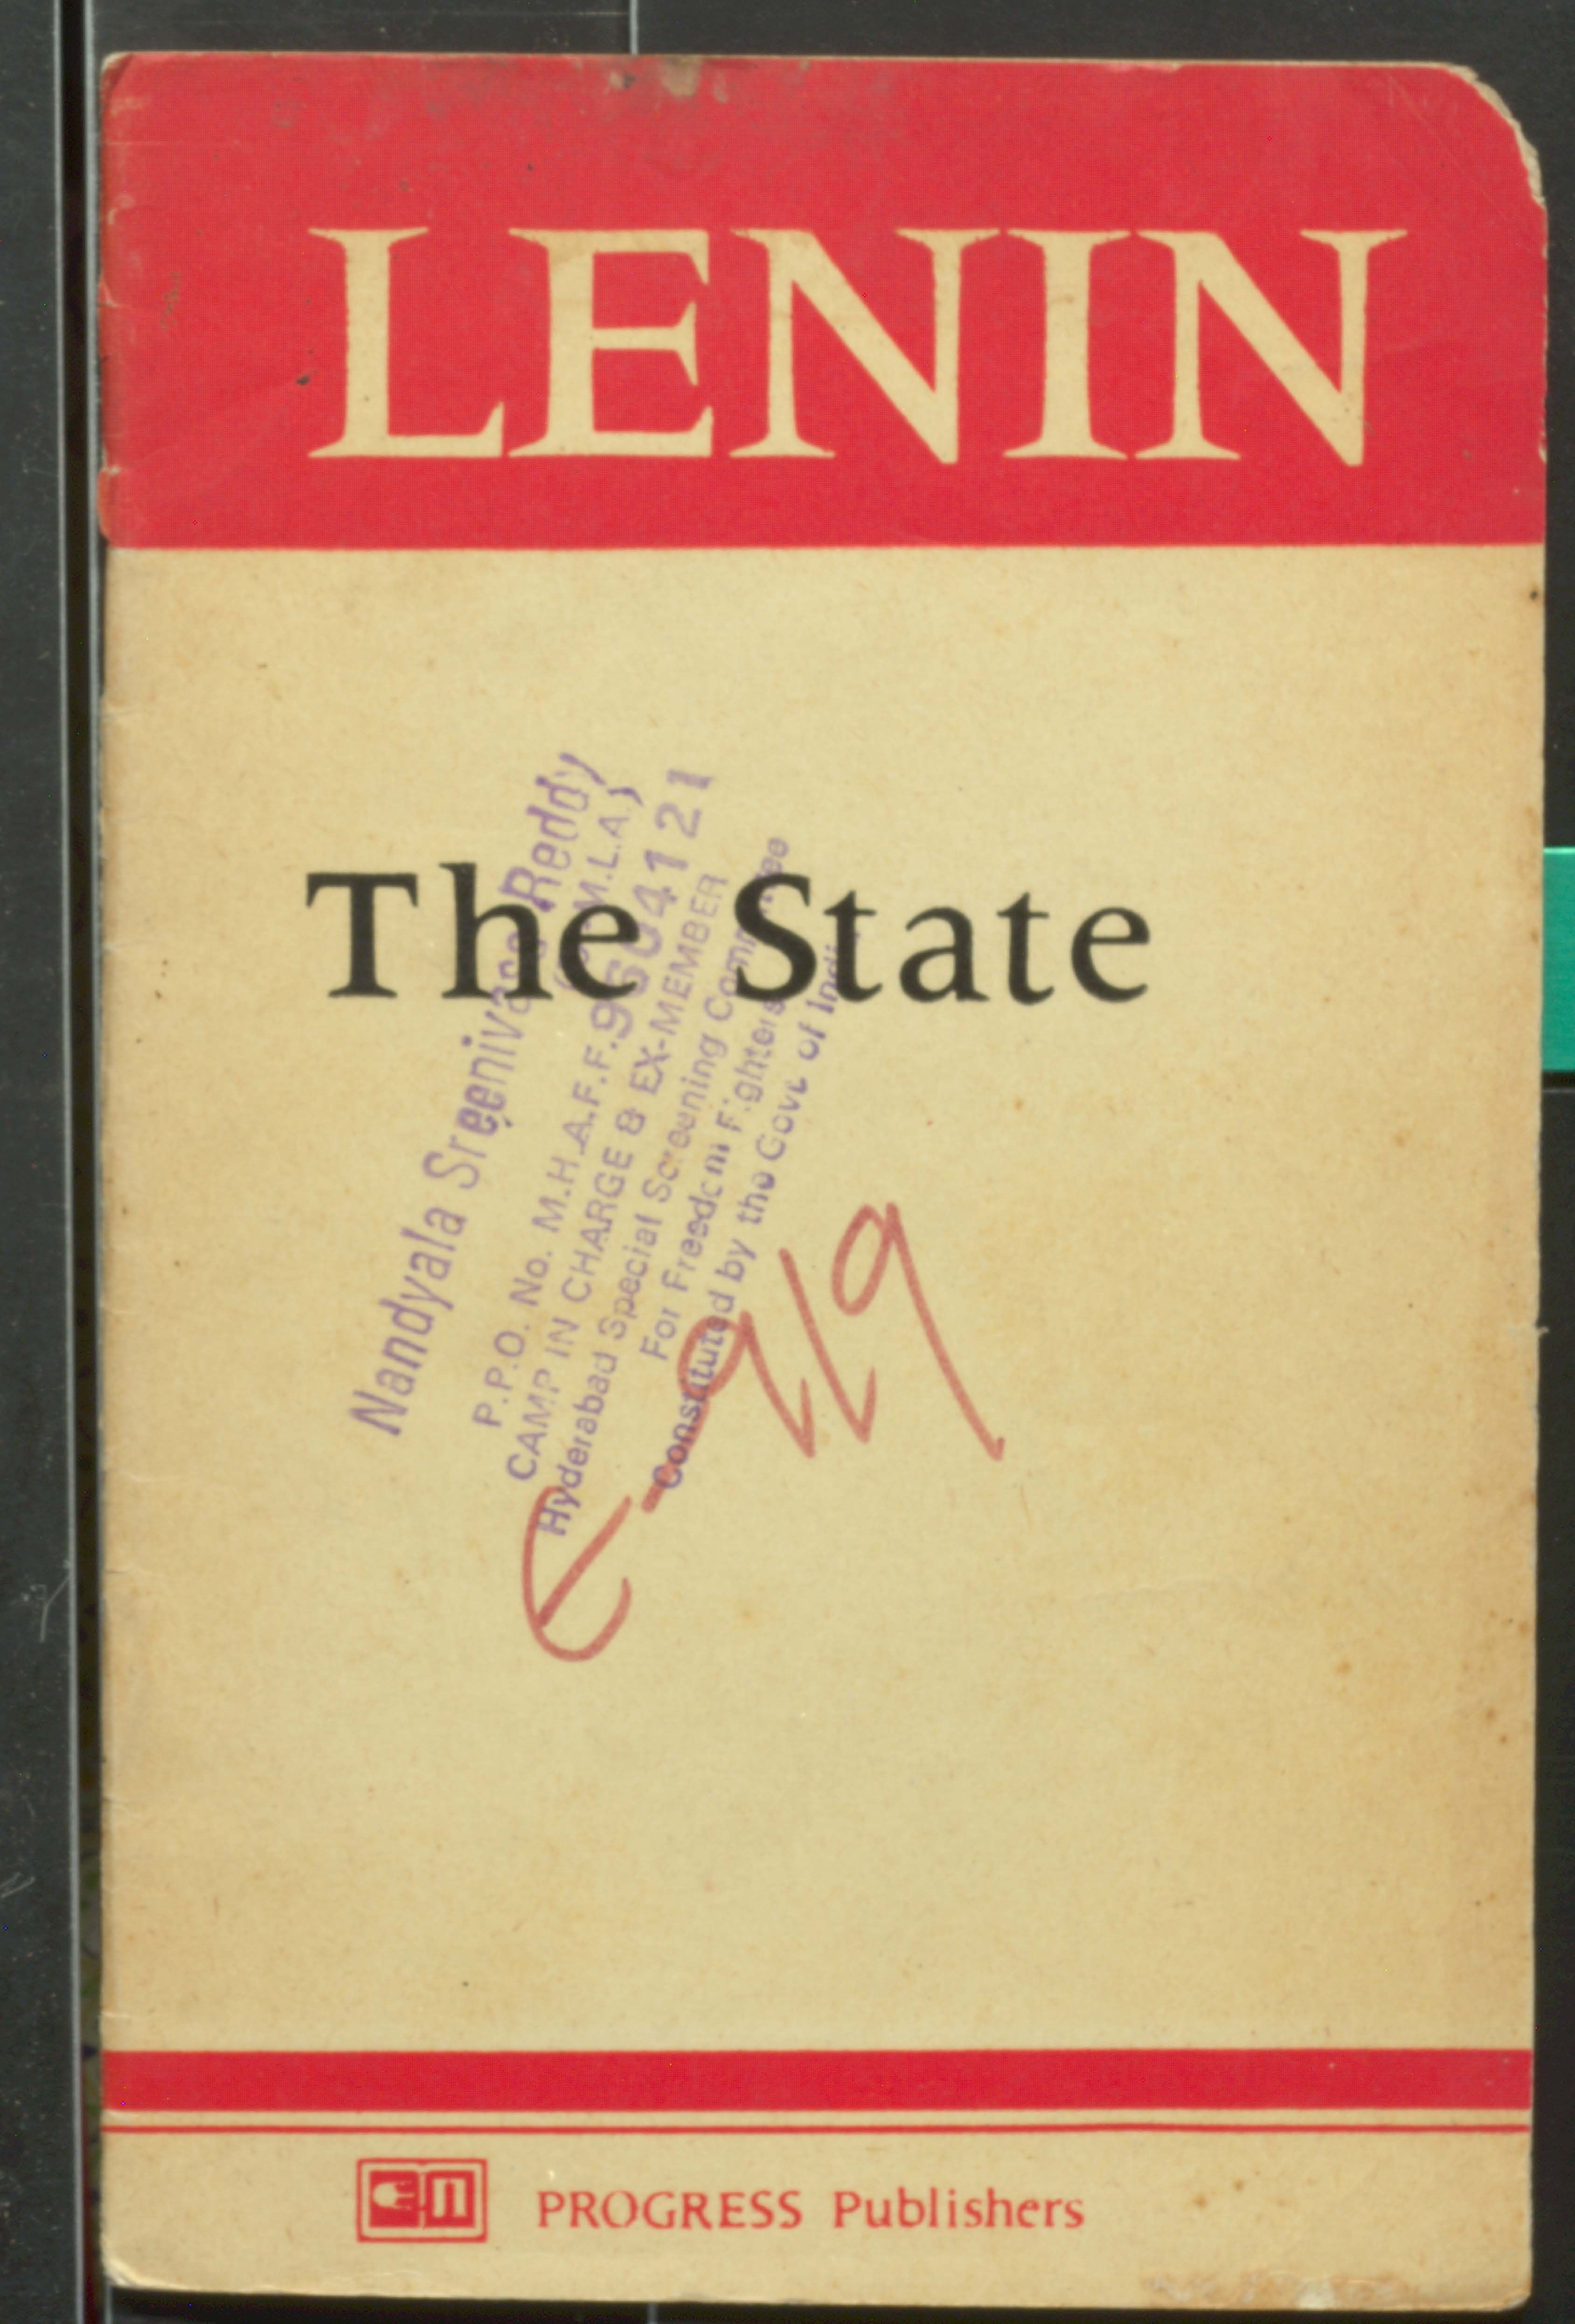 Lenin the state